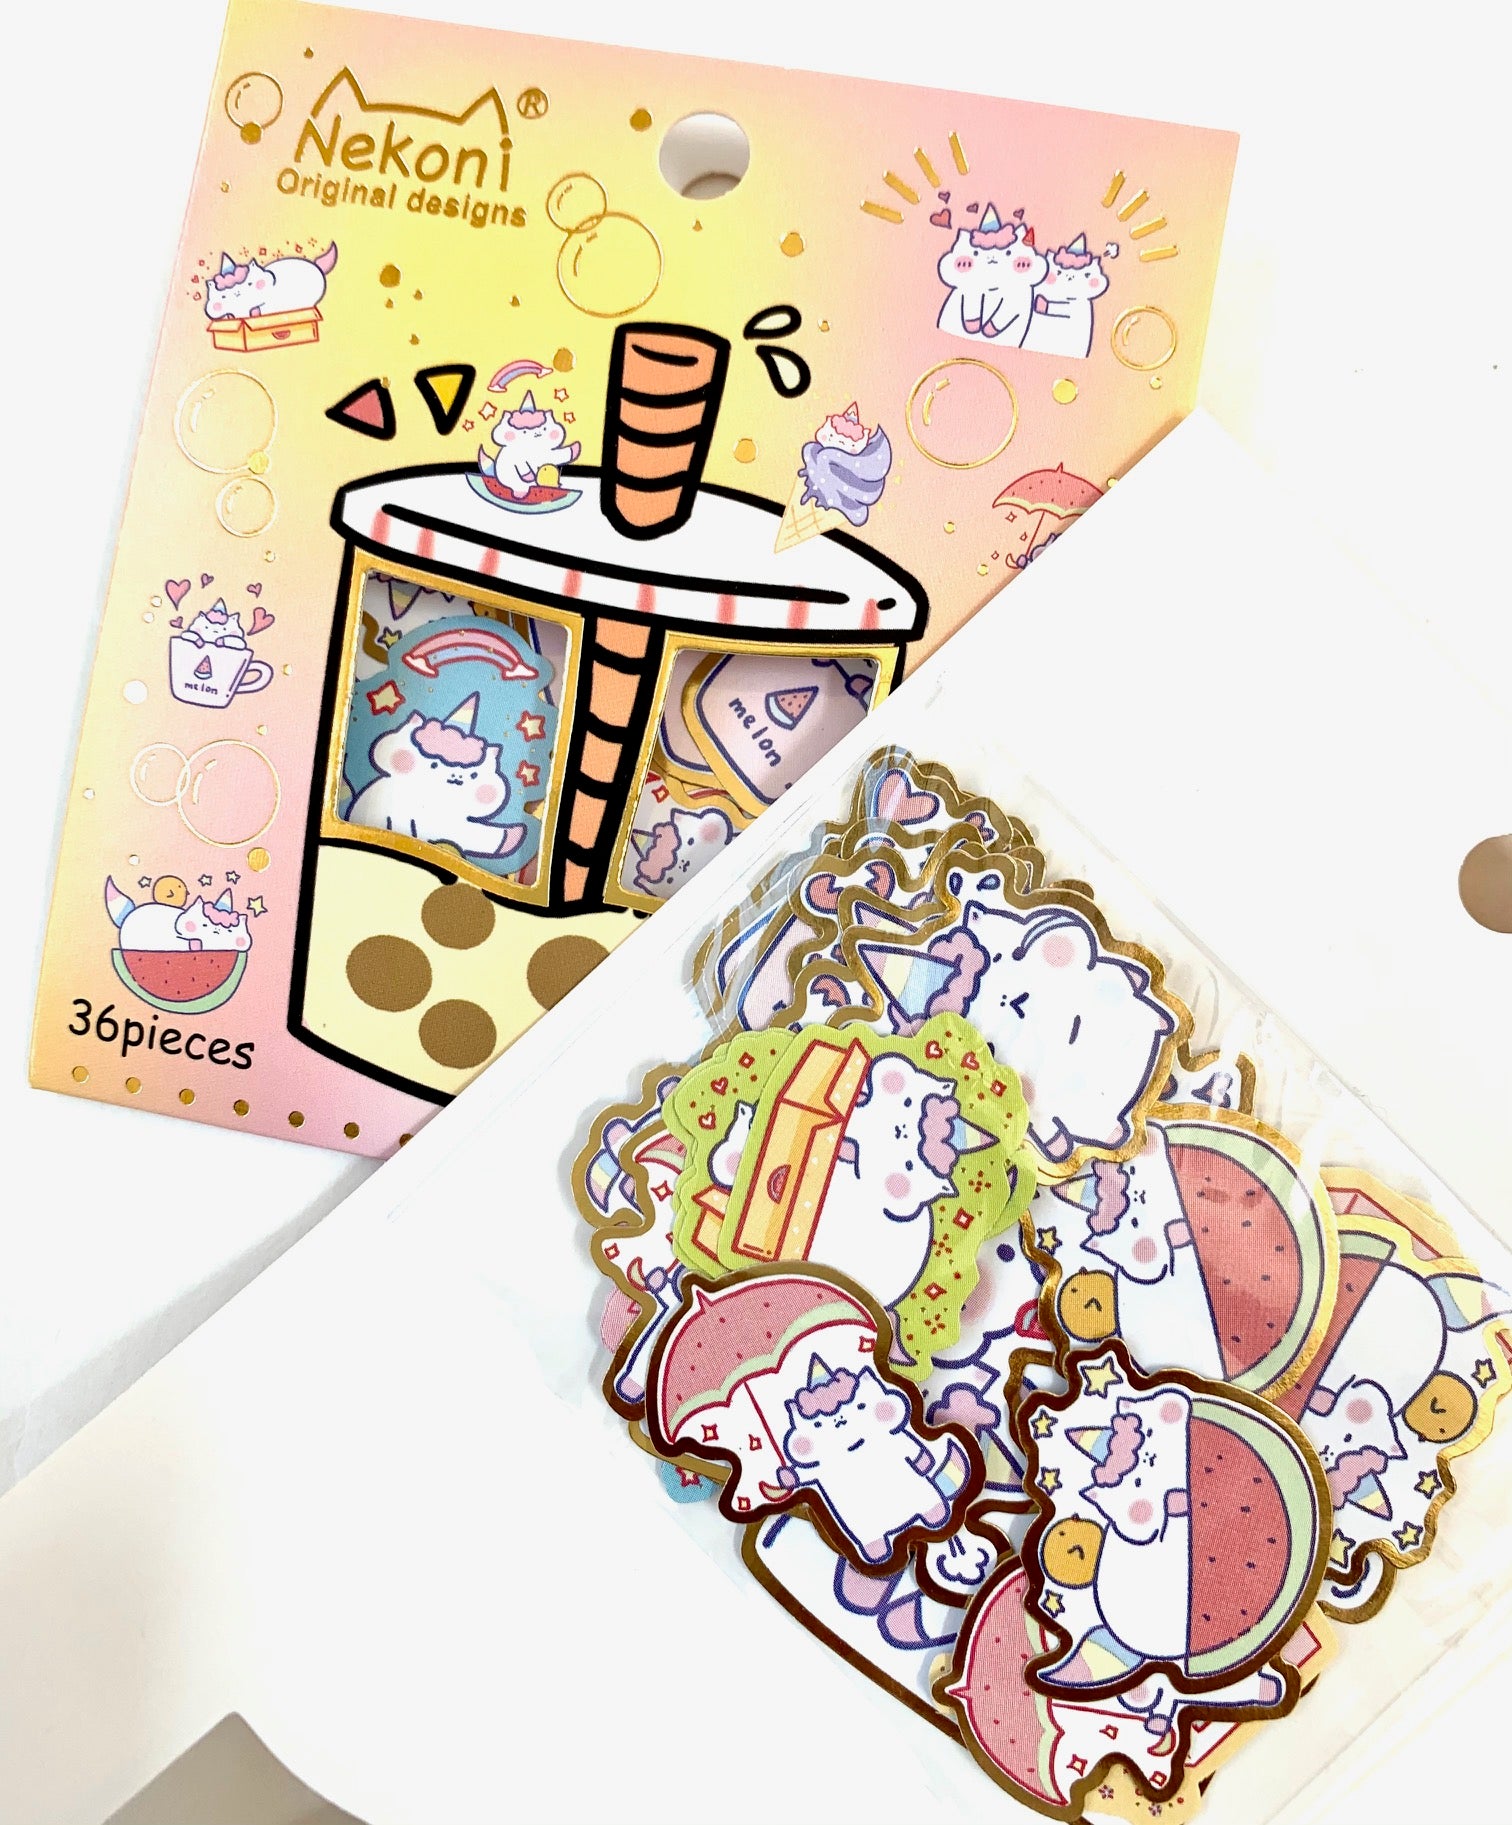 Bubble Tea Drink Sticker – Unicorn Eclipse